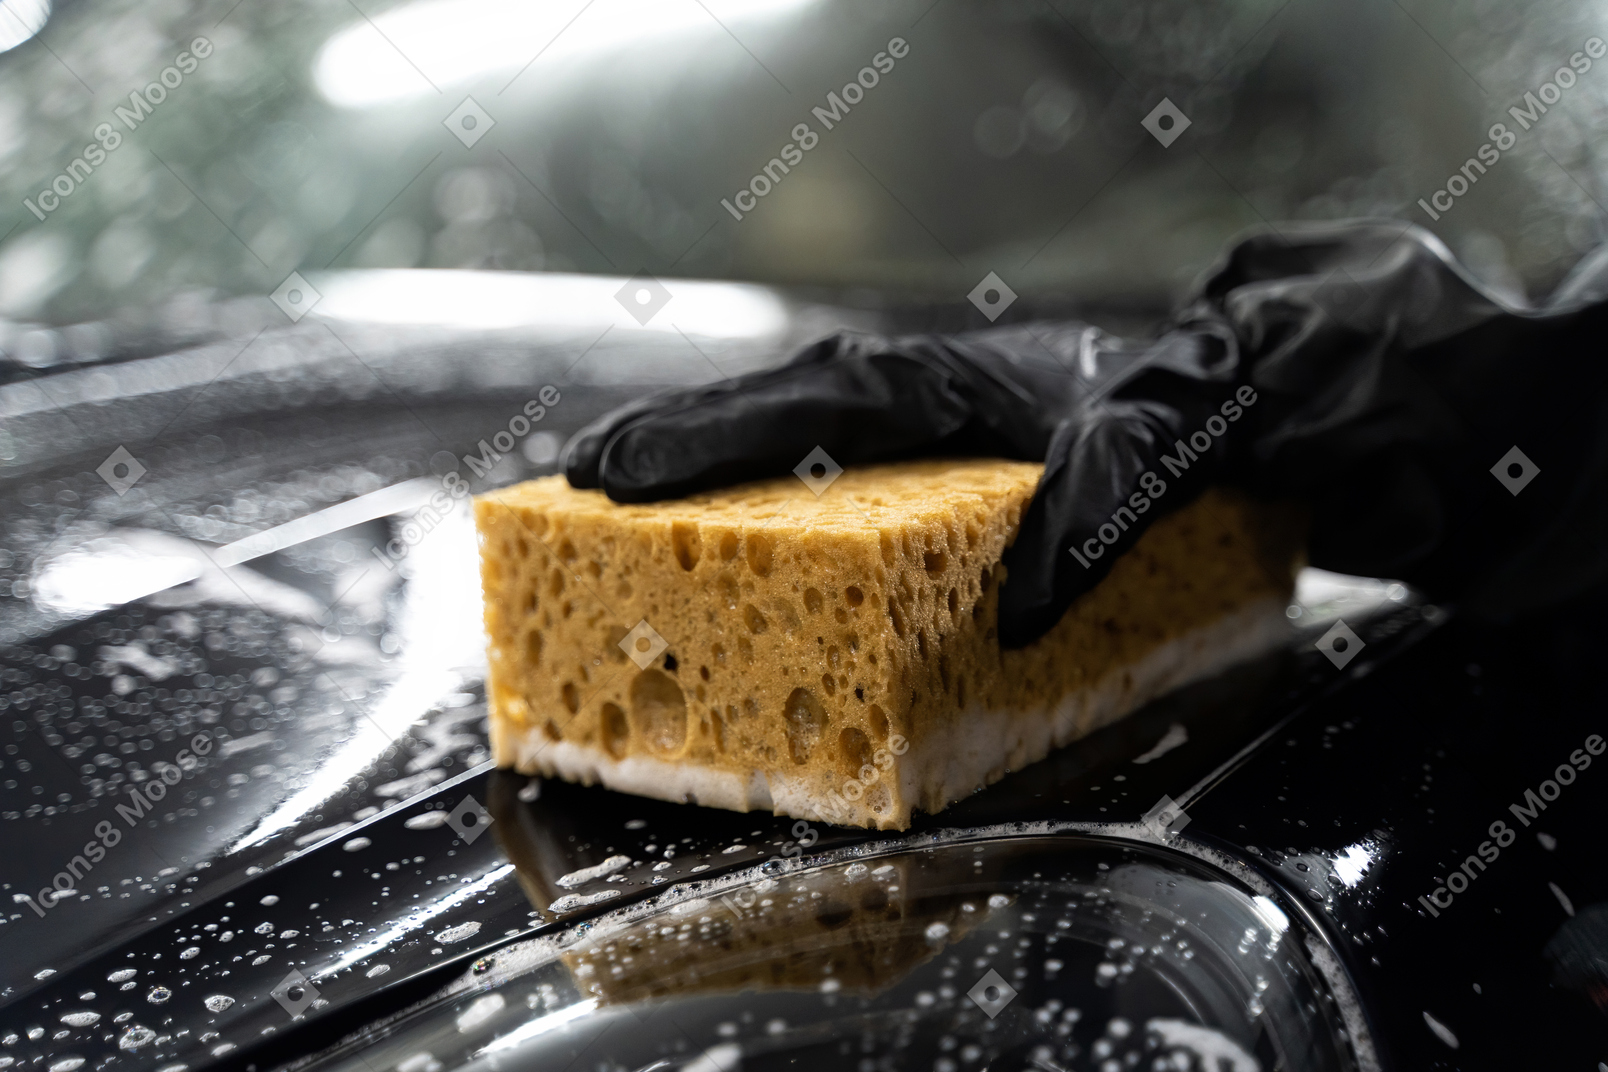 Human hand washing a car with sponge